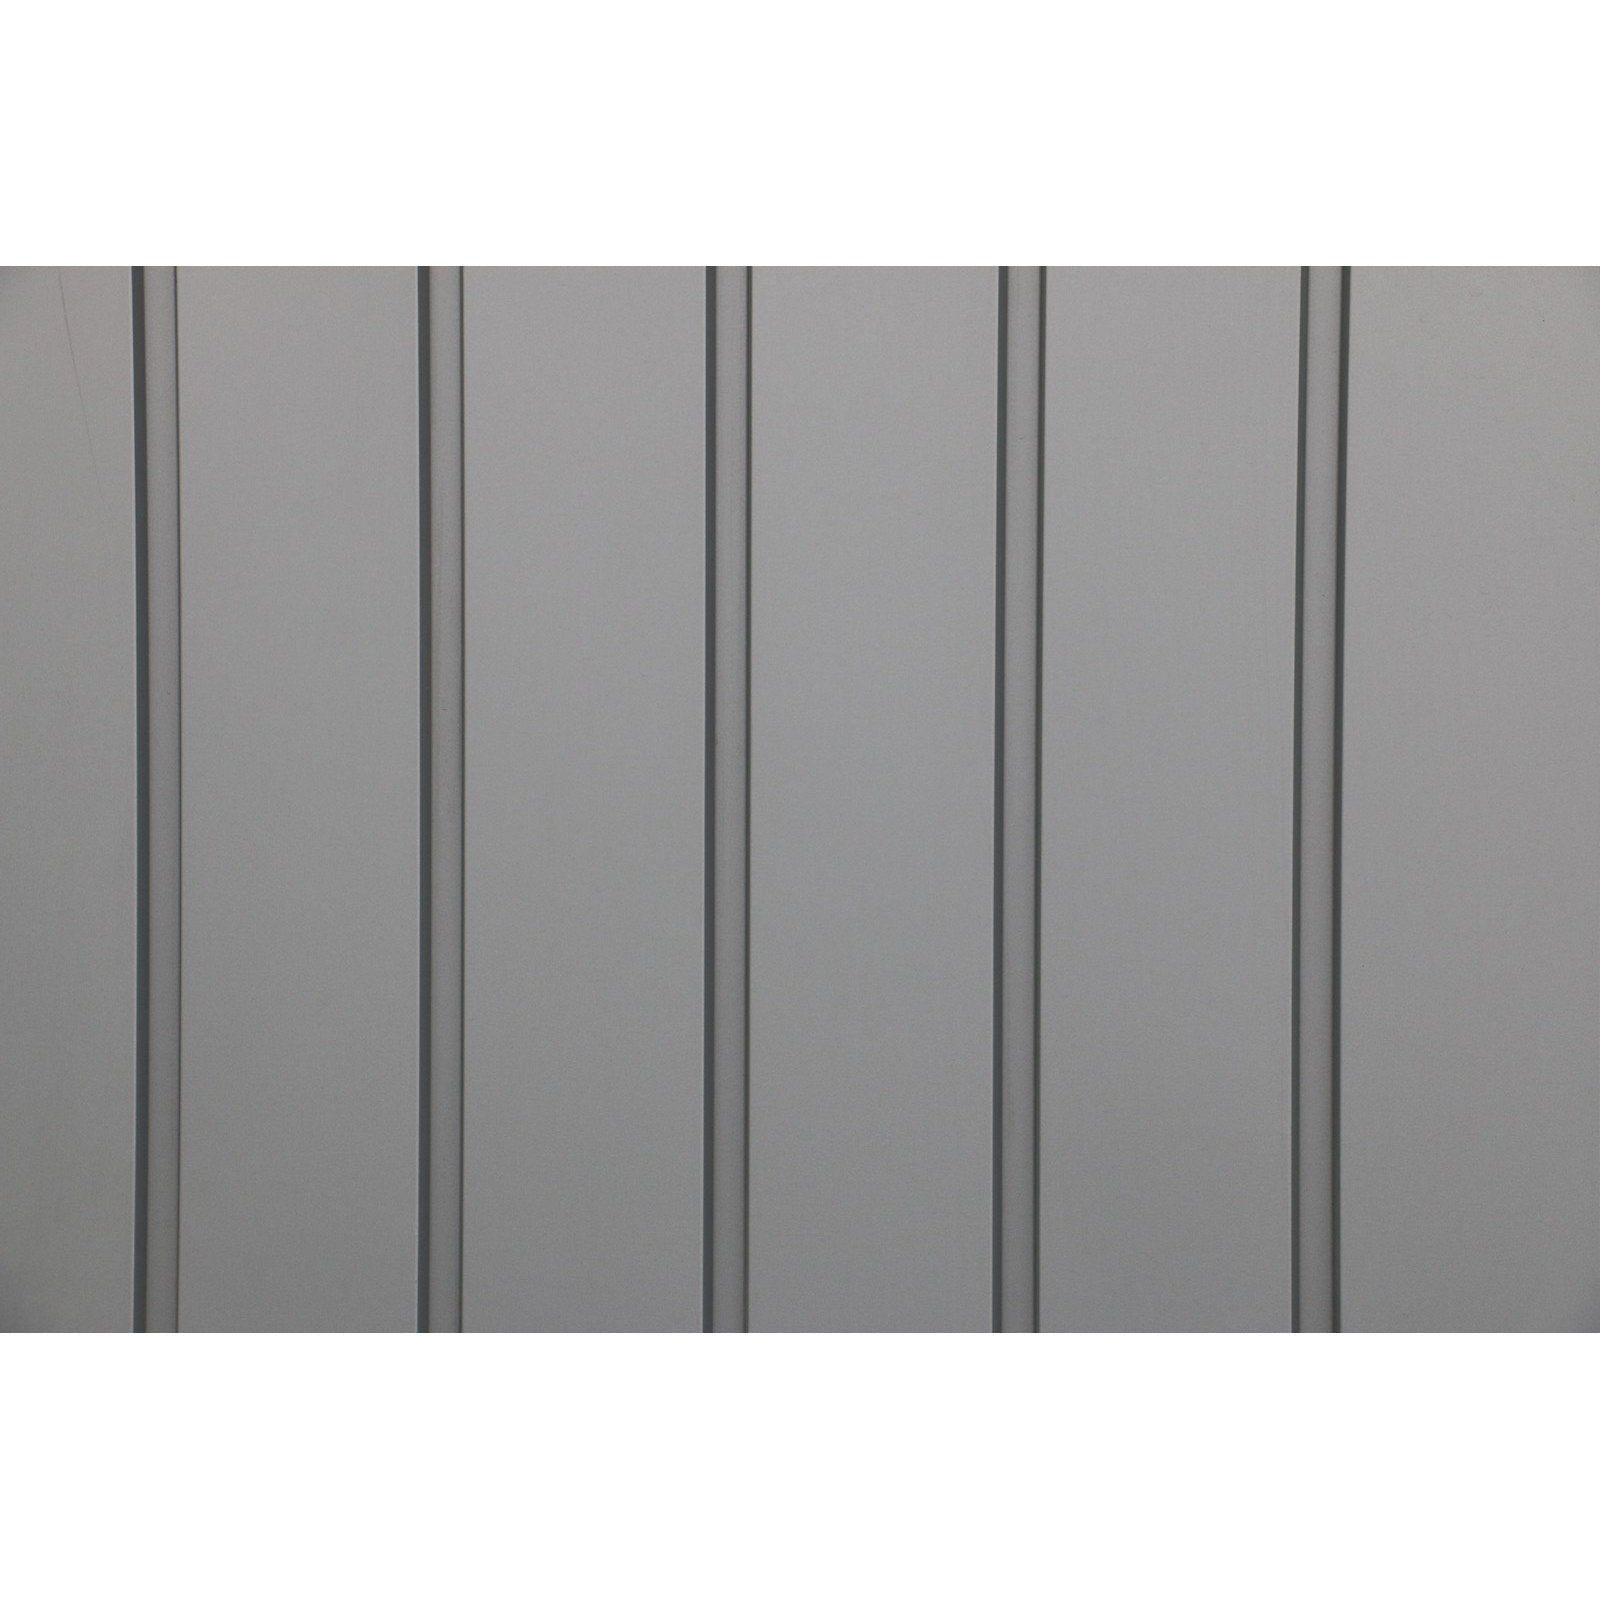 Duramax sheds Duramax 6ft x 5ft Palladium Premier Metal Shed - Light Gray